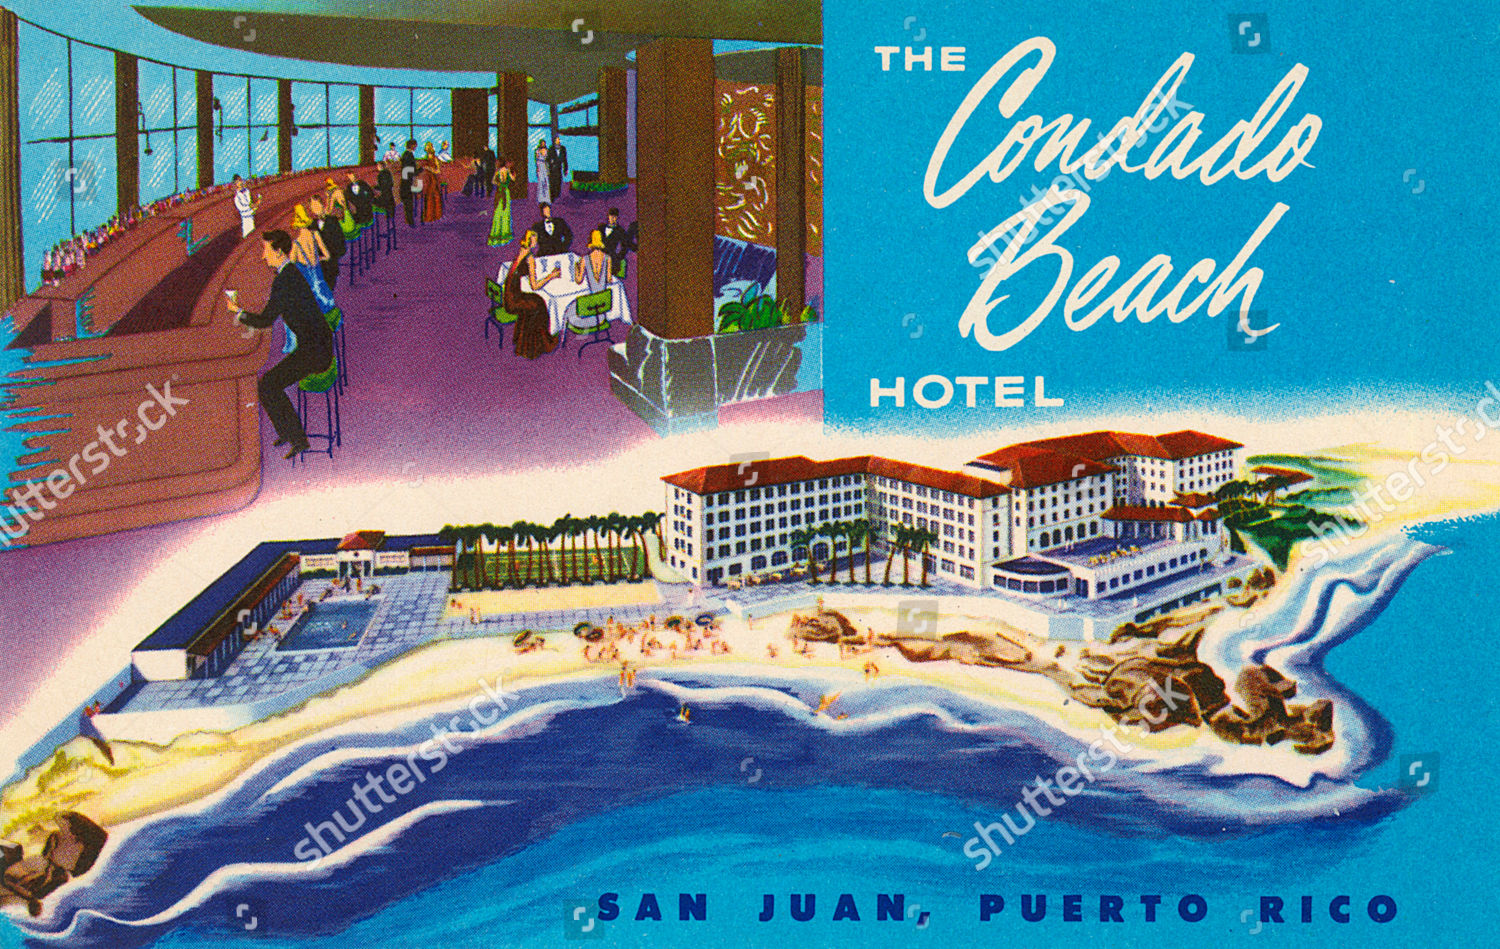 Contable Alta exposición Descartar Condado Beach Hotel San Juan Puerto - Foto de stock de contenido editorial:  imagen de stock | Shutterstock